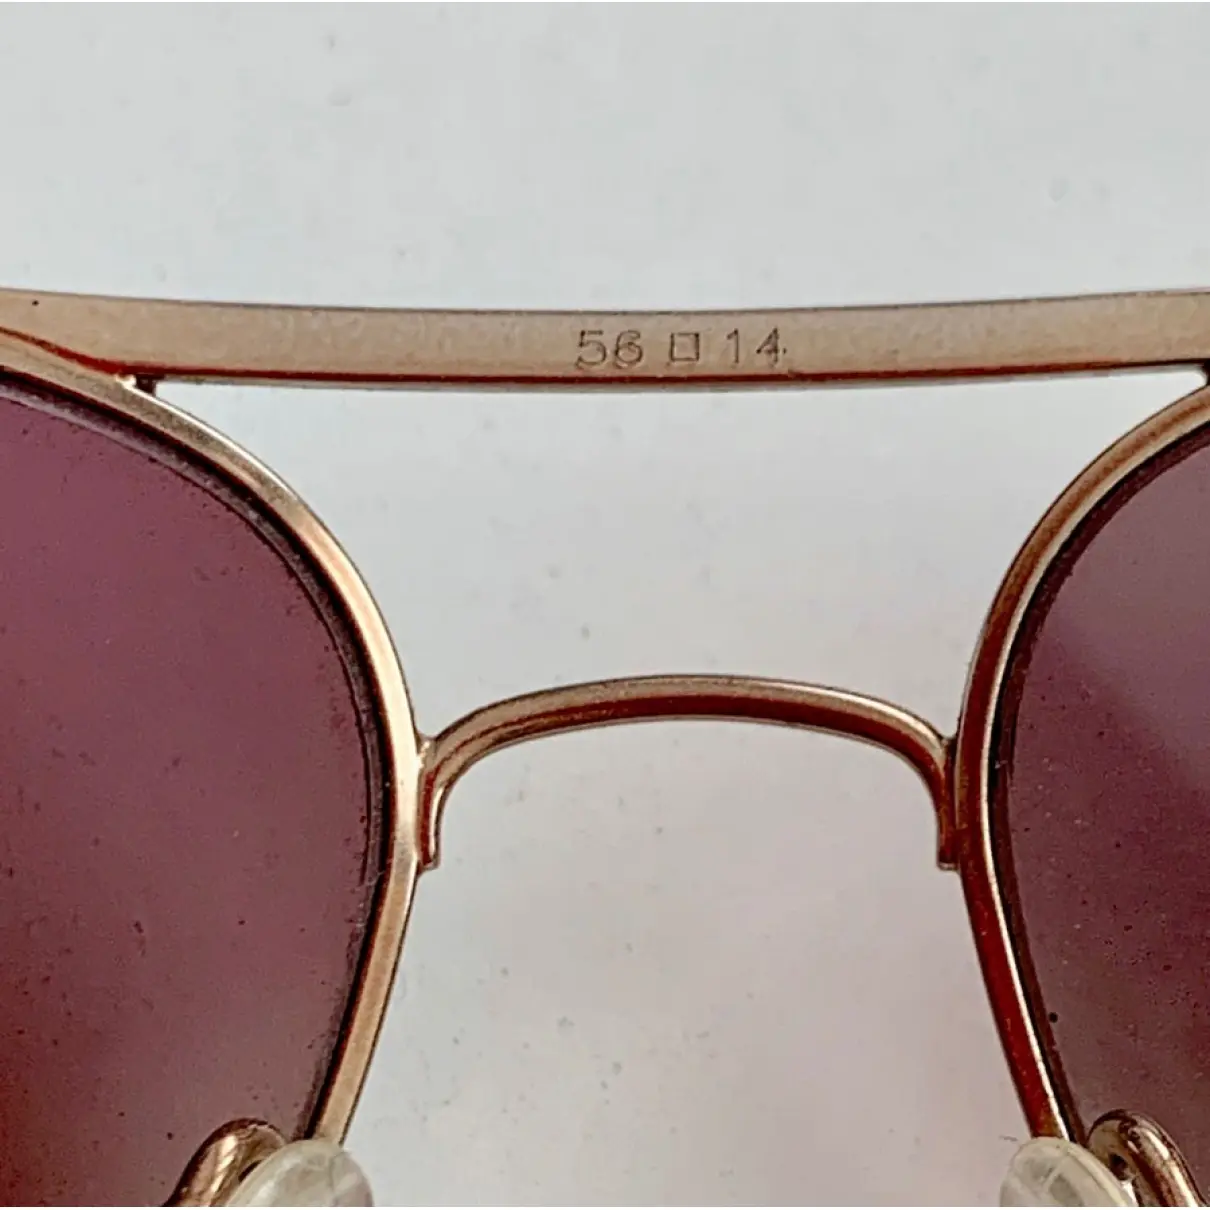 Aviator sunglasses Chanel - Vintage